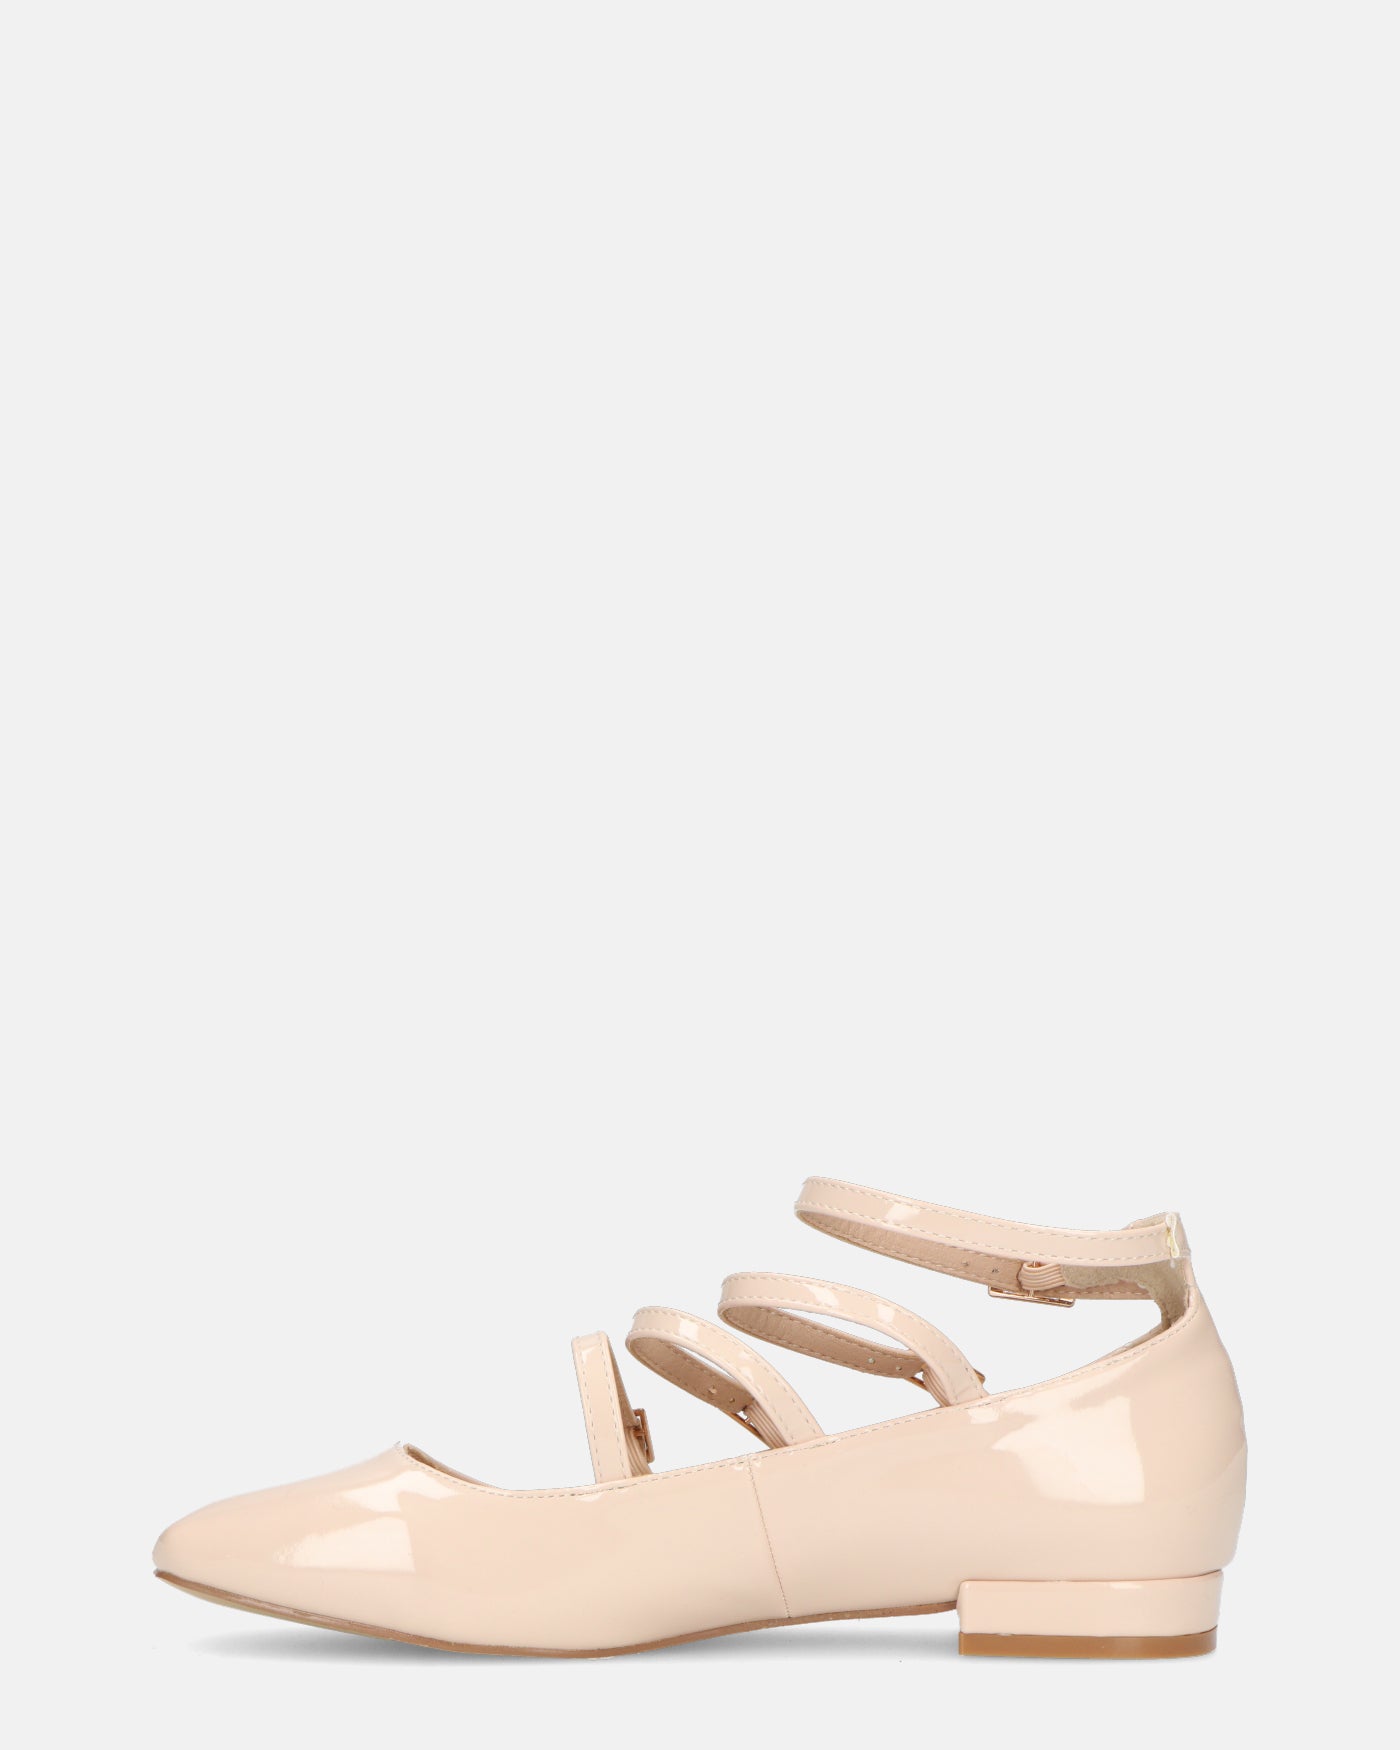 ZAWE - beige glassy sandals with straps